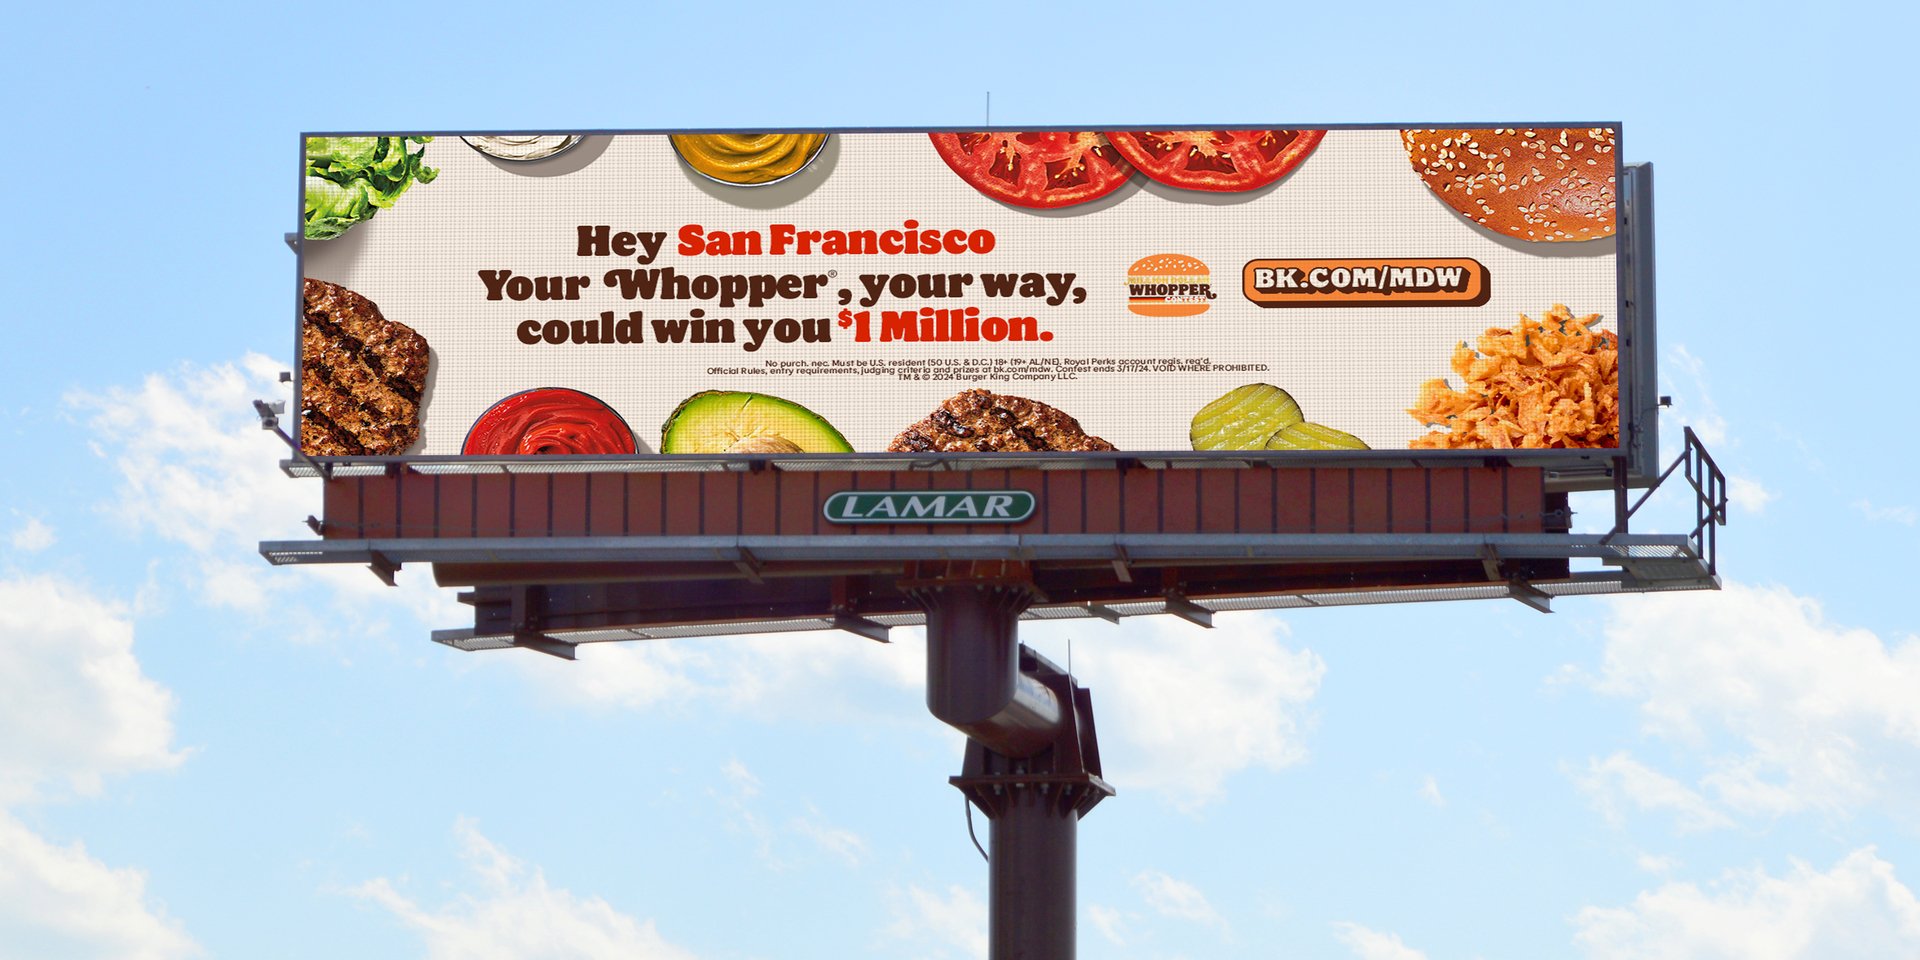 Lamar Advertising selects Vistar Media to power its US DOOH billboard network